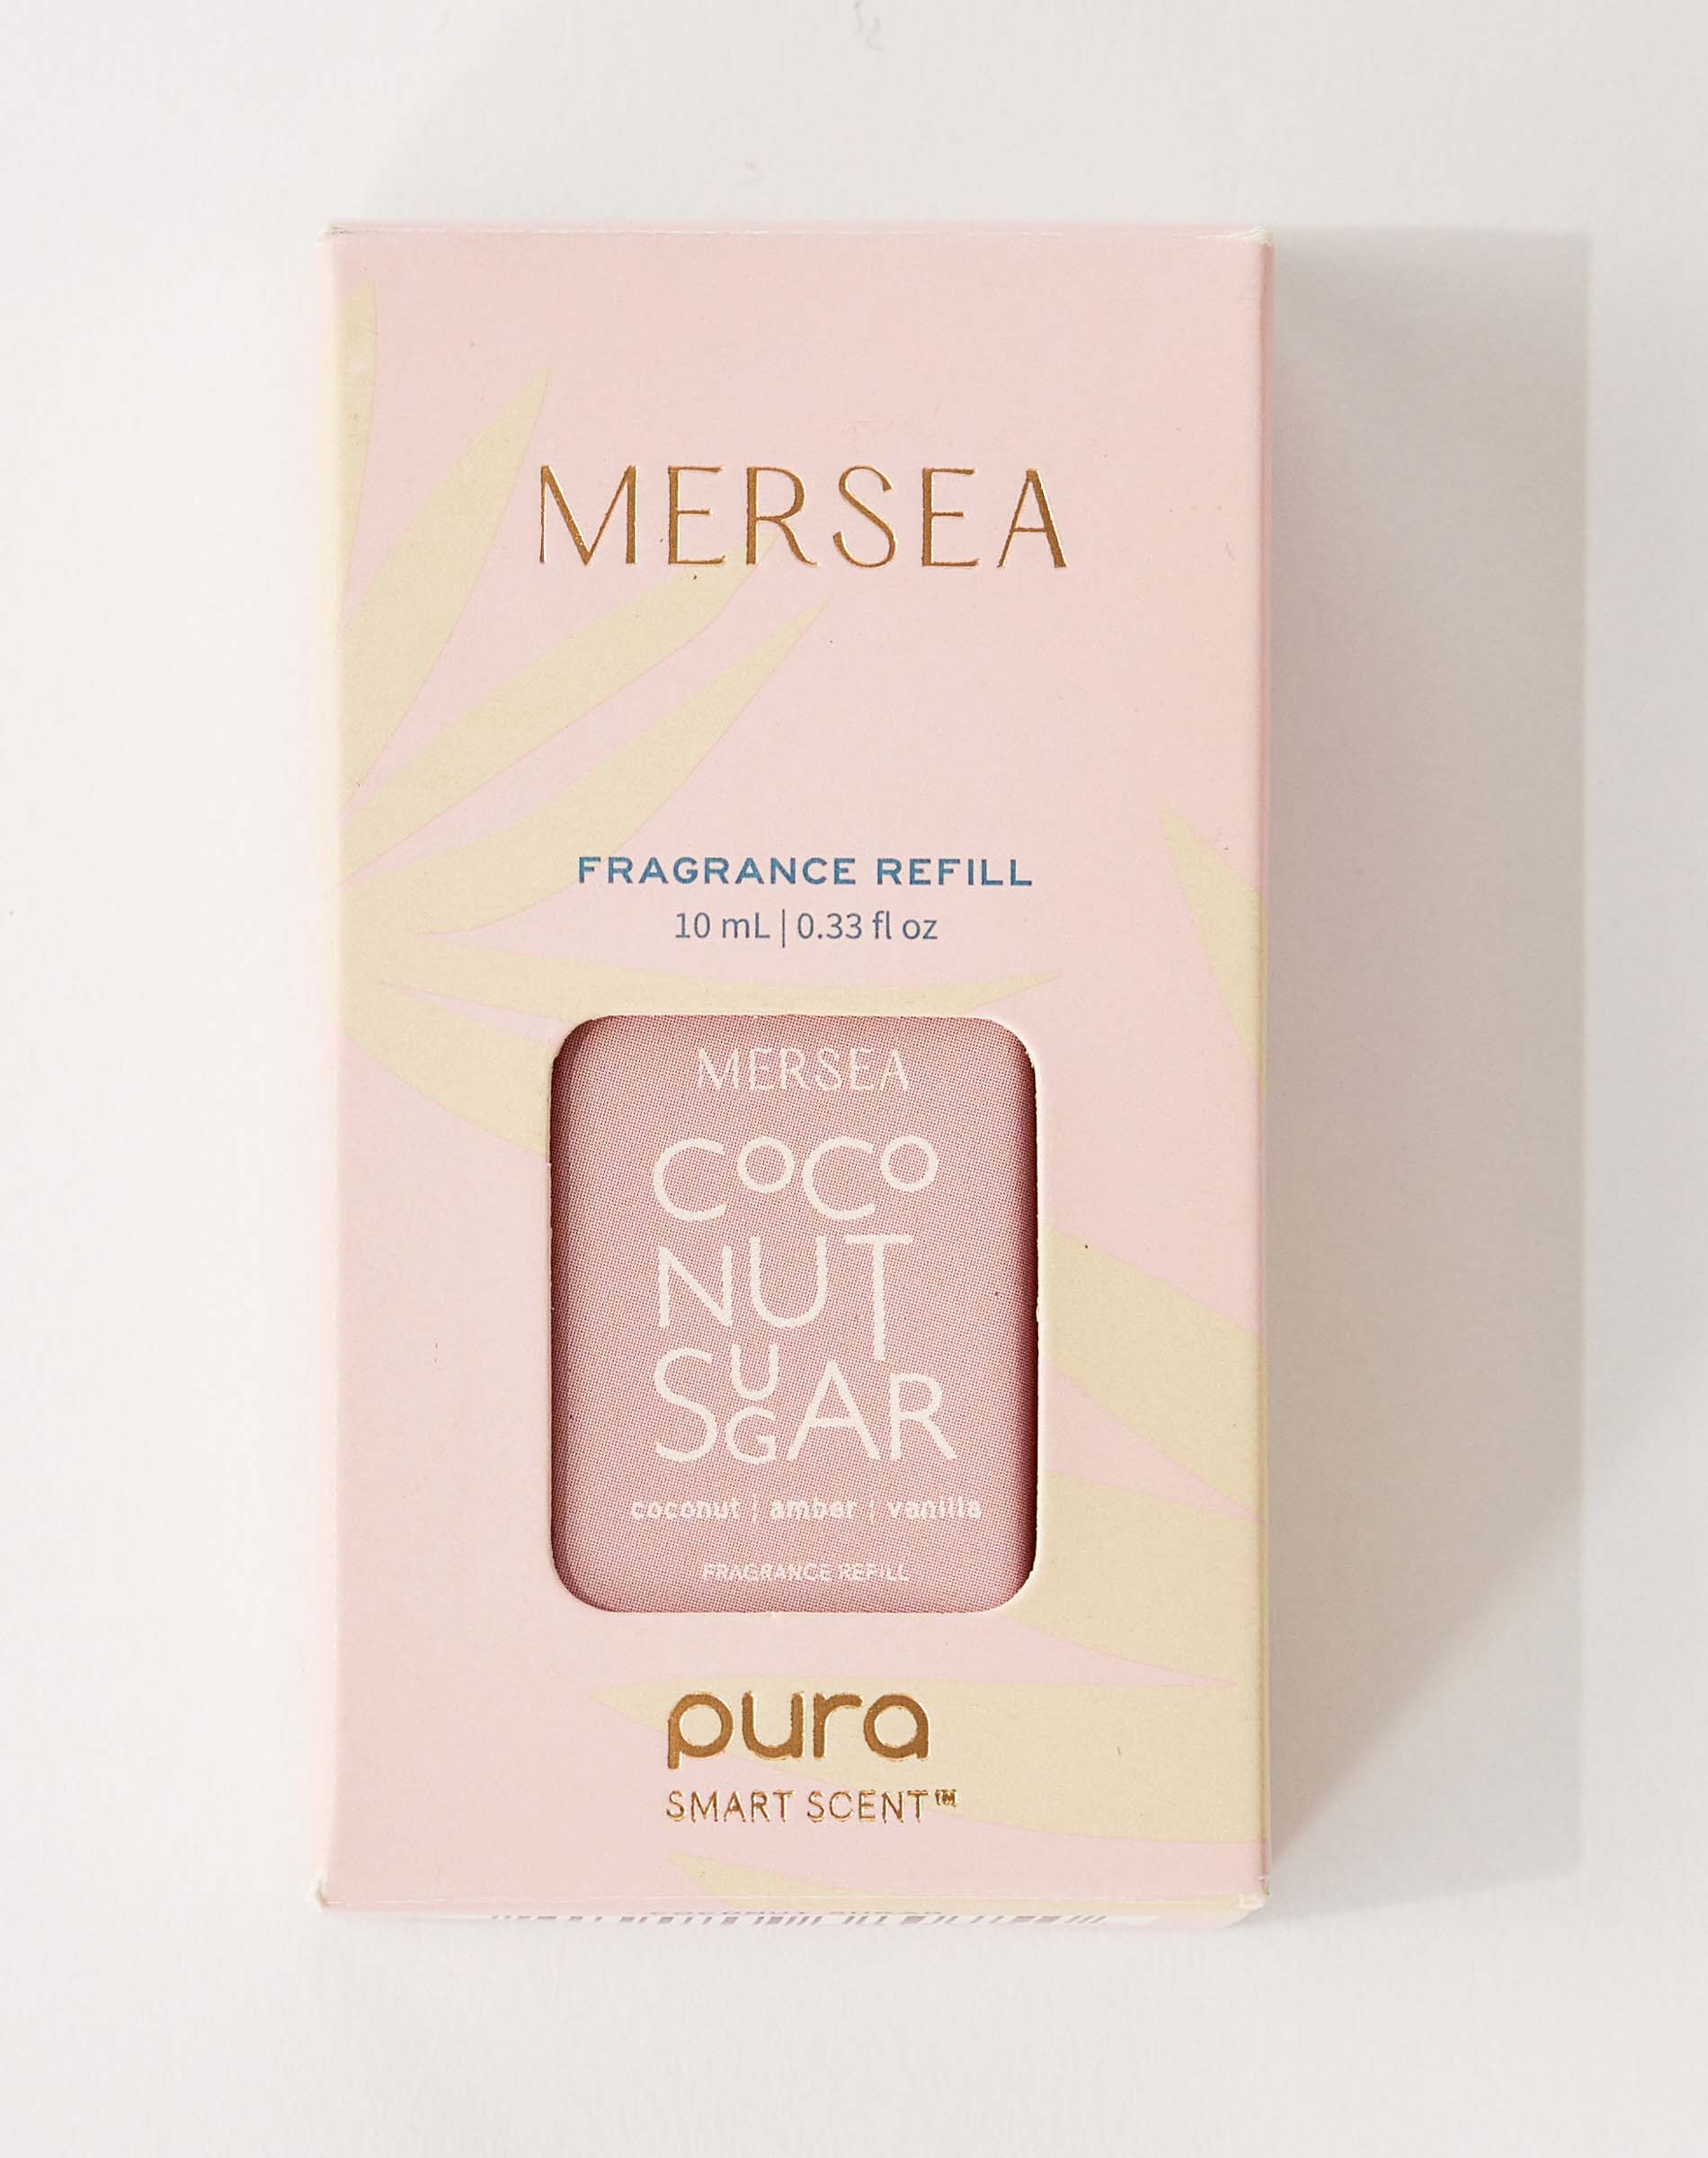 boxed pura smart vial of mersea coconut sugar scent